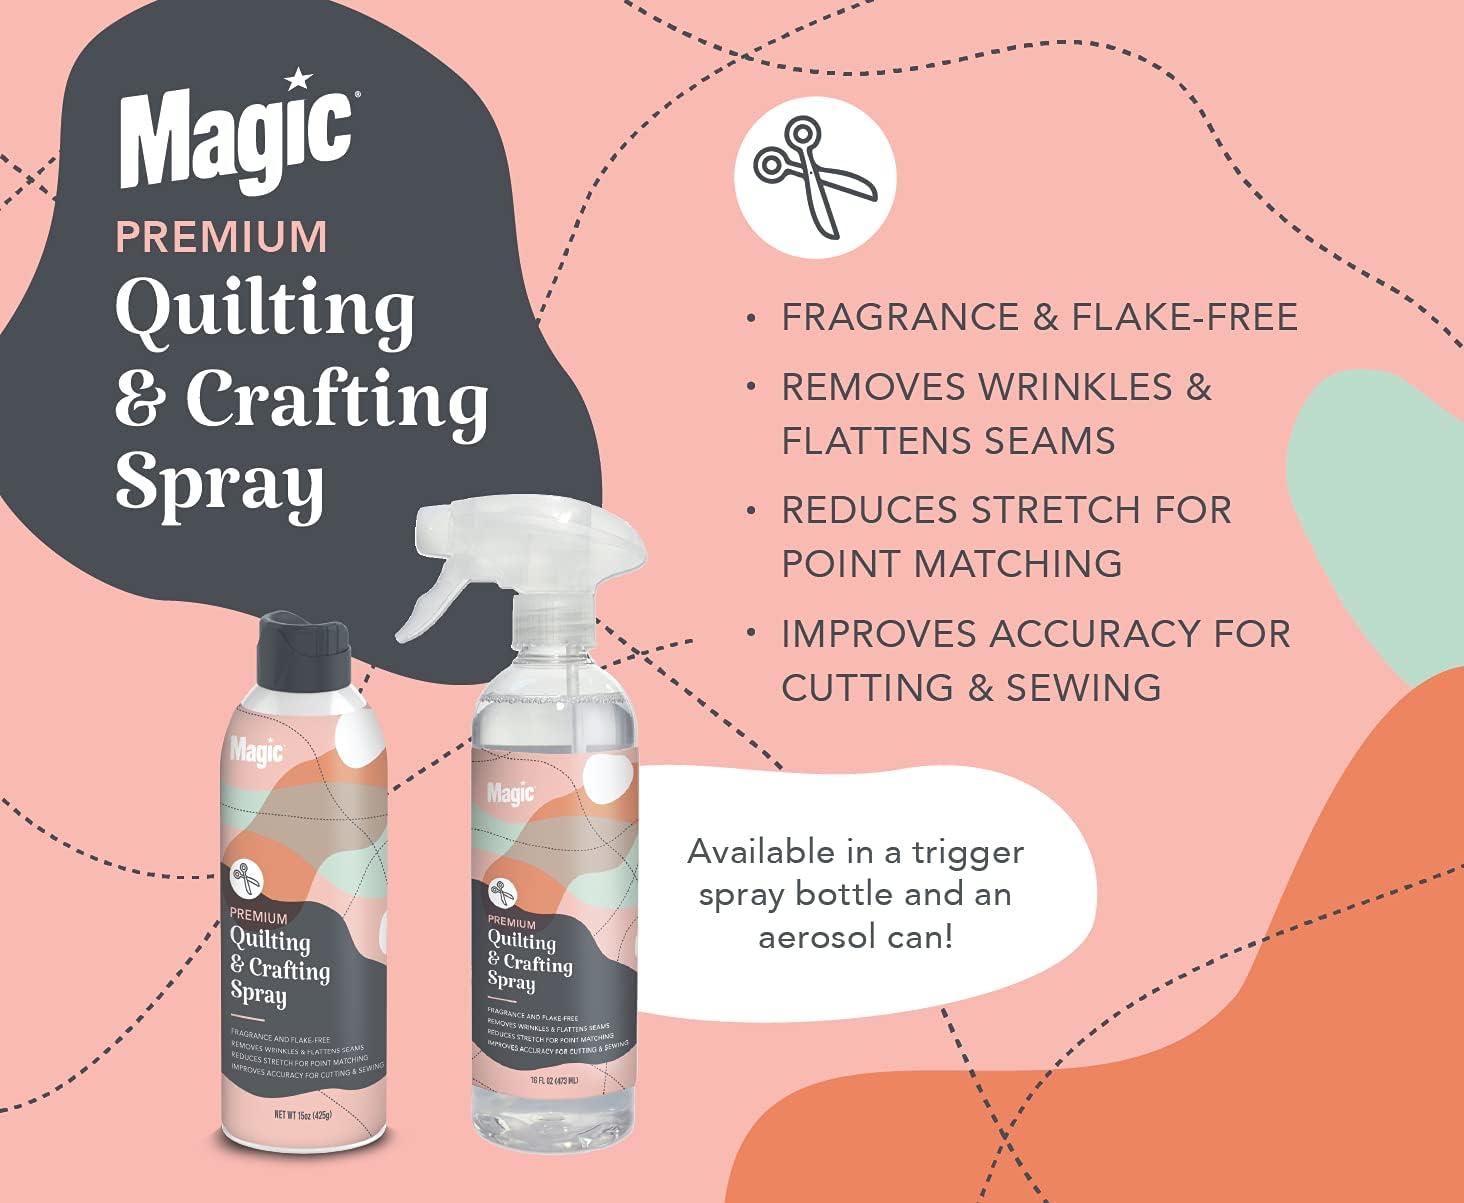 Magic Premium Quilting & Crafting Spray Bottle Fabric Spray for